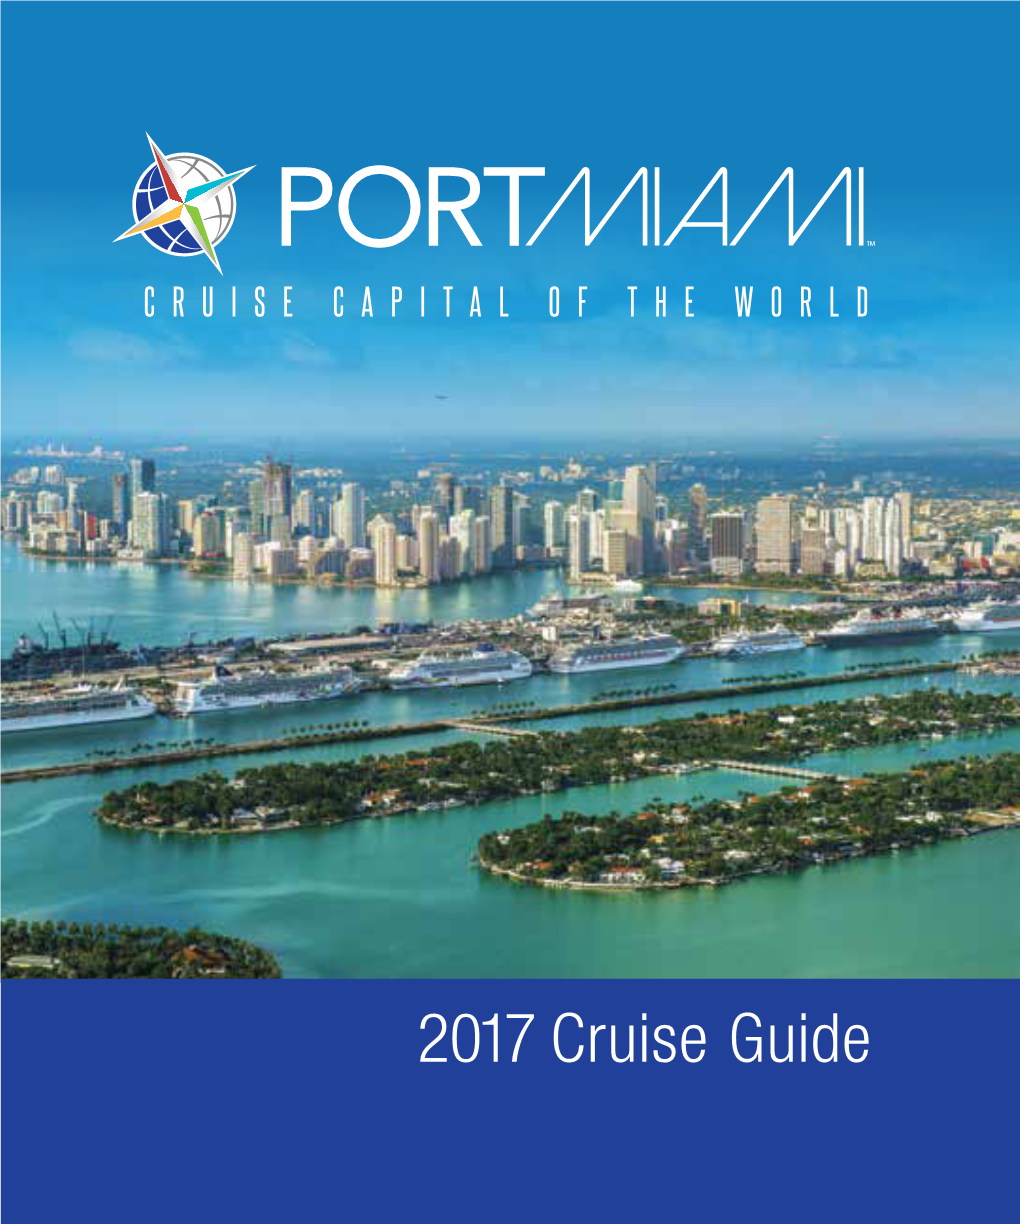 Portmiami 2017 Cruise Guide